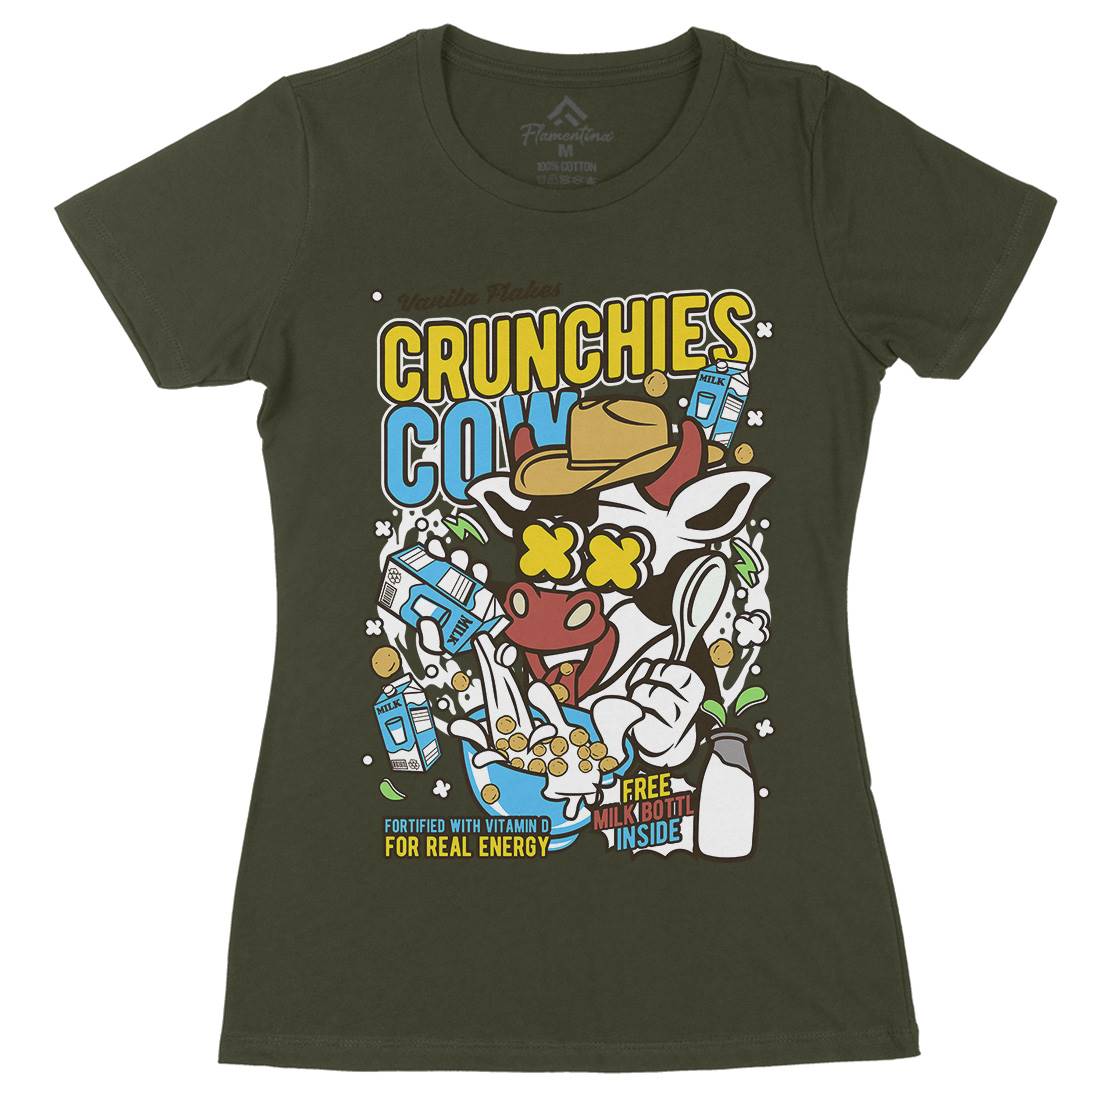 Crunchies Cow Womens Organic Crew Neck T-Shirt Food C533